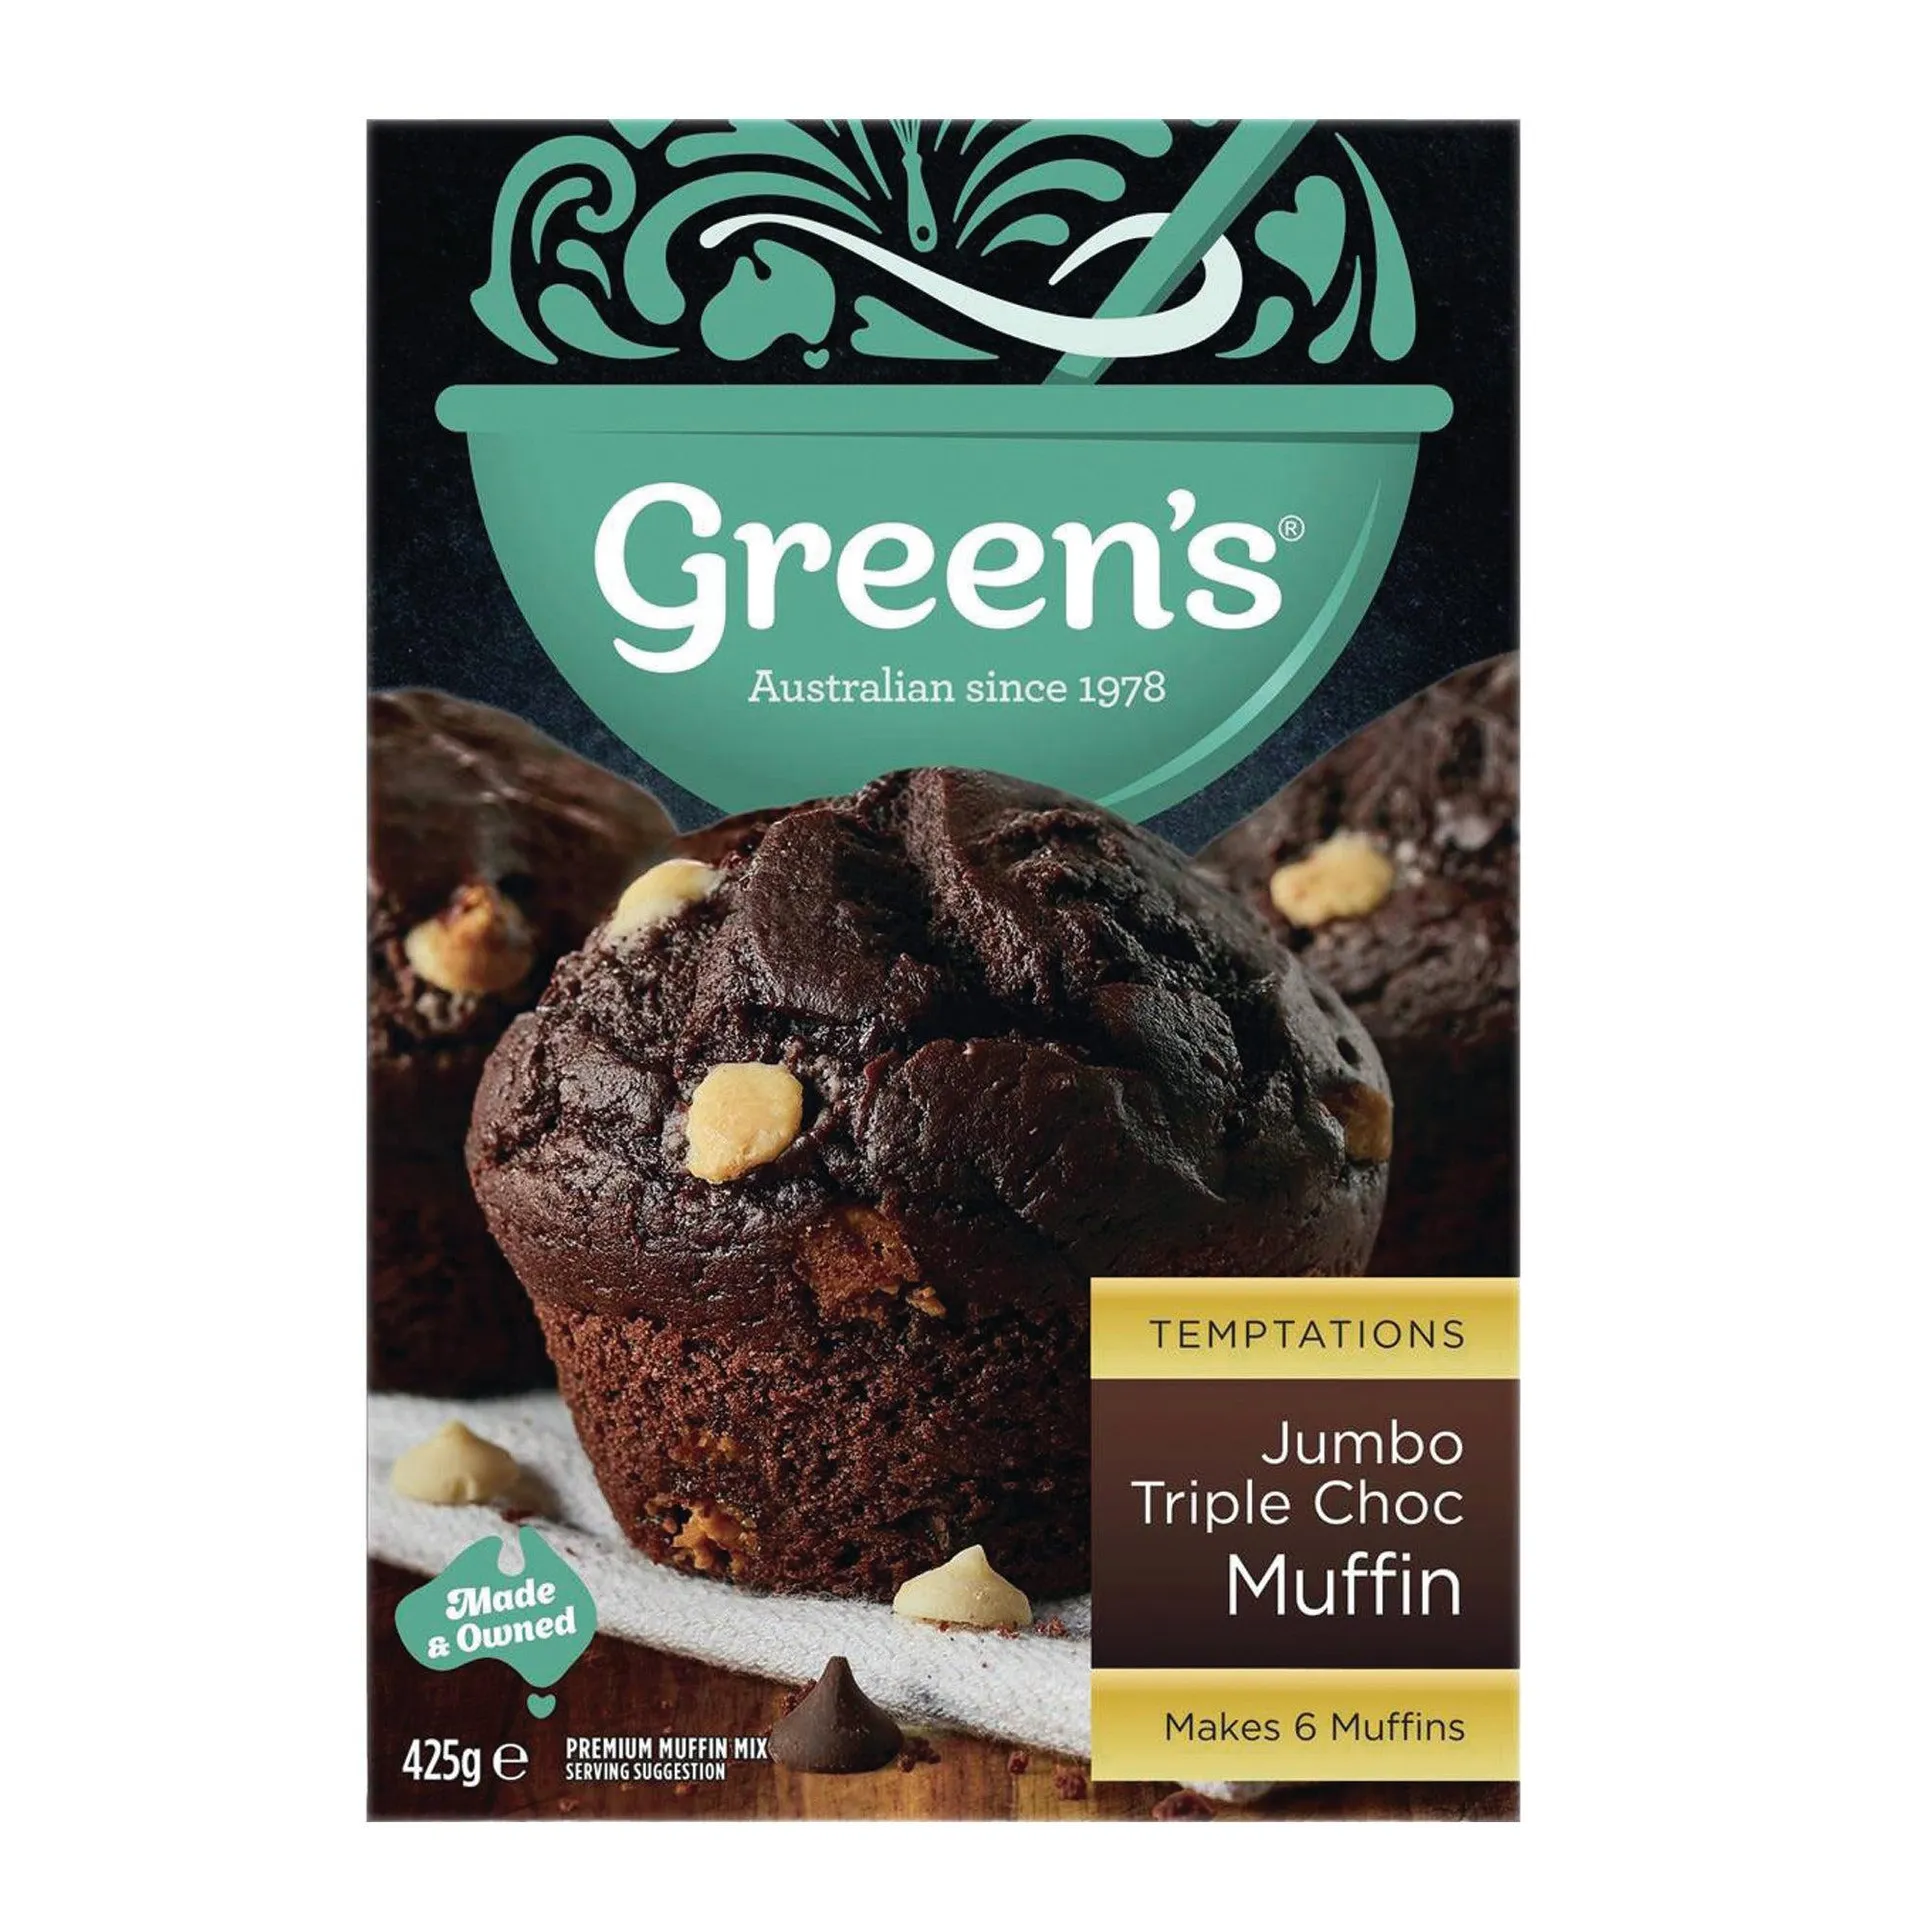 Green's Temptations Jumbo Triple Chocolate Muffin 425g